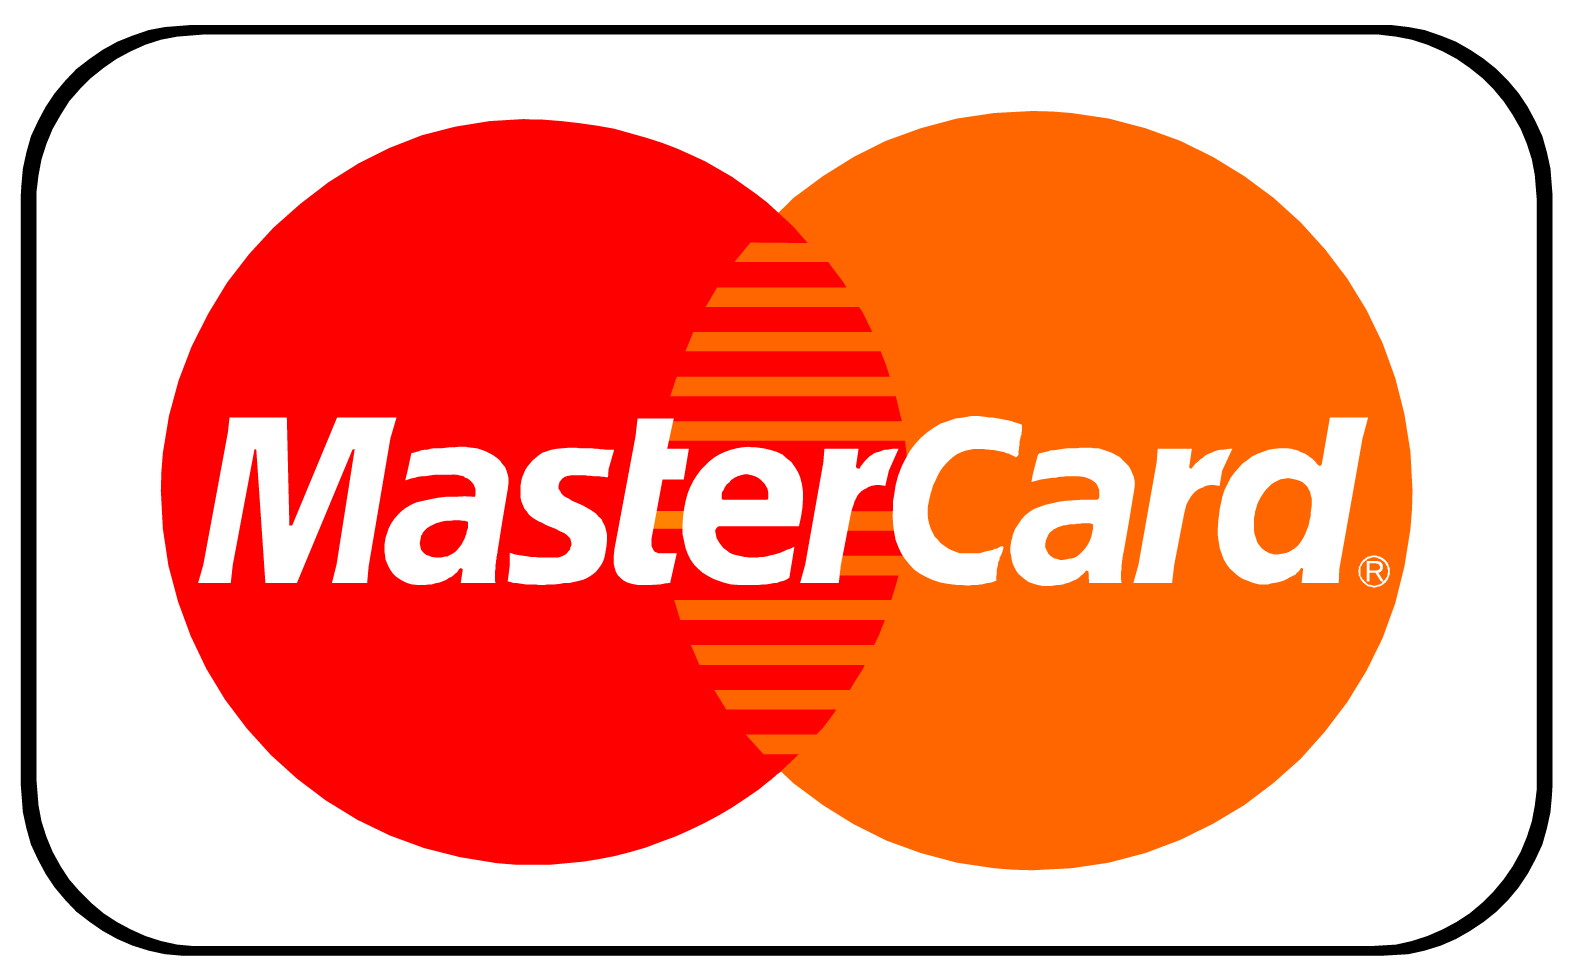 Mastercard logo PNG images free download